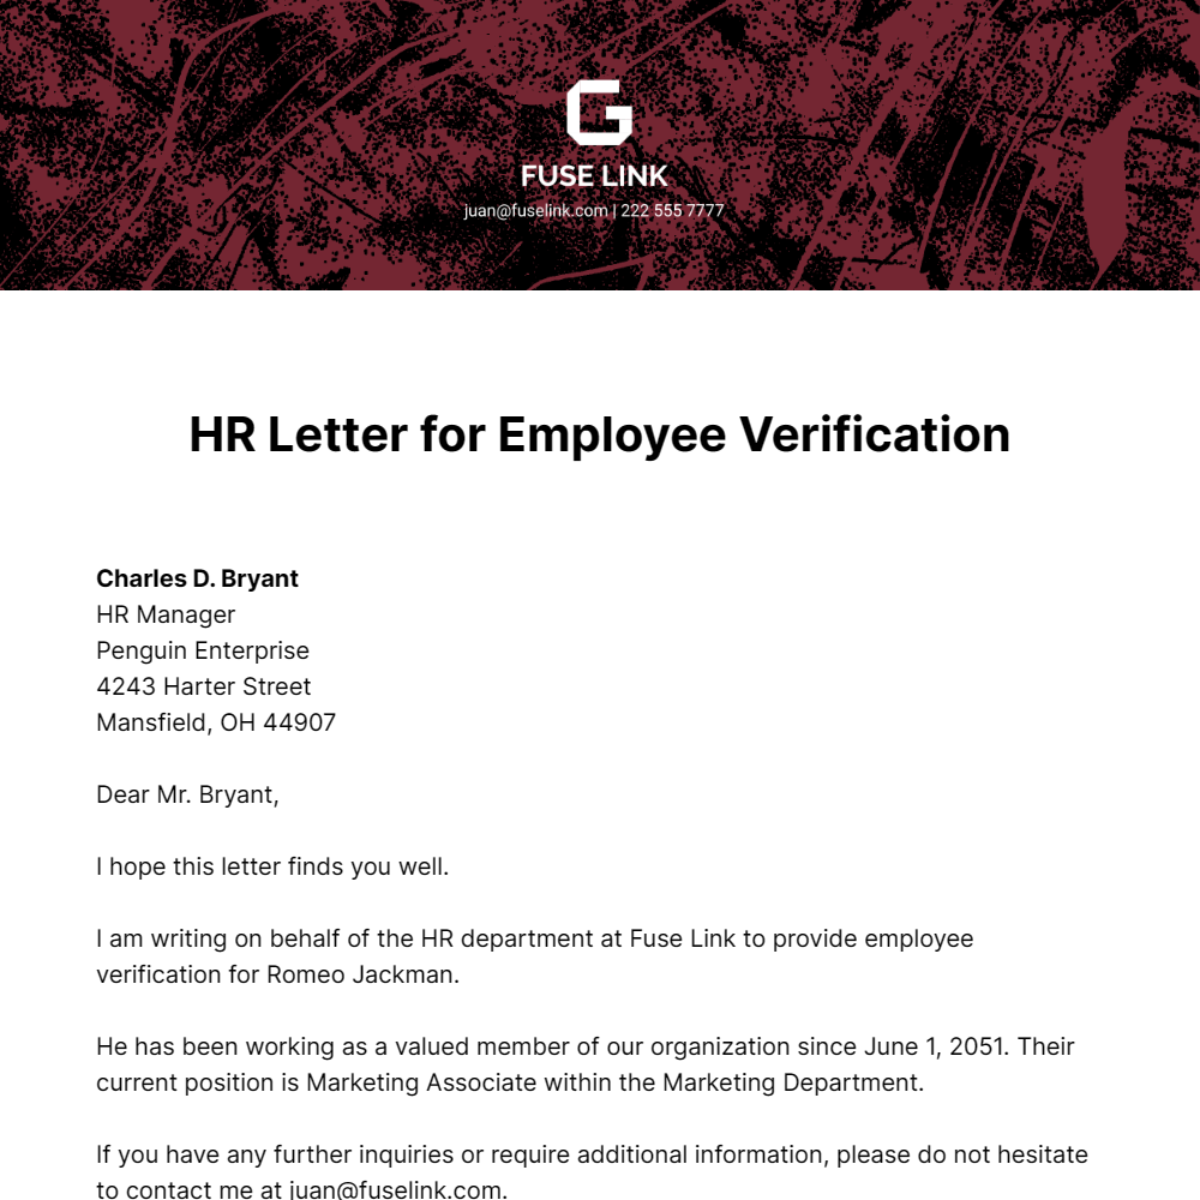 HR Letter for Employee Verification Template